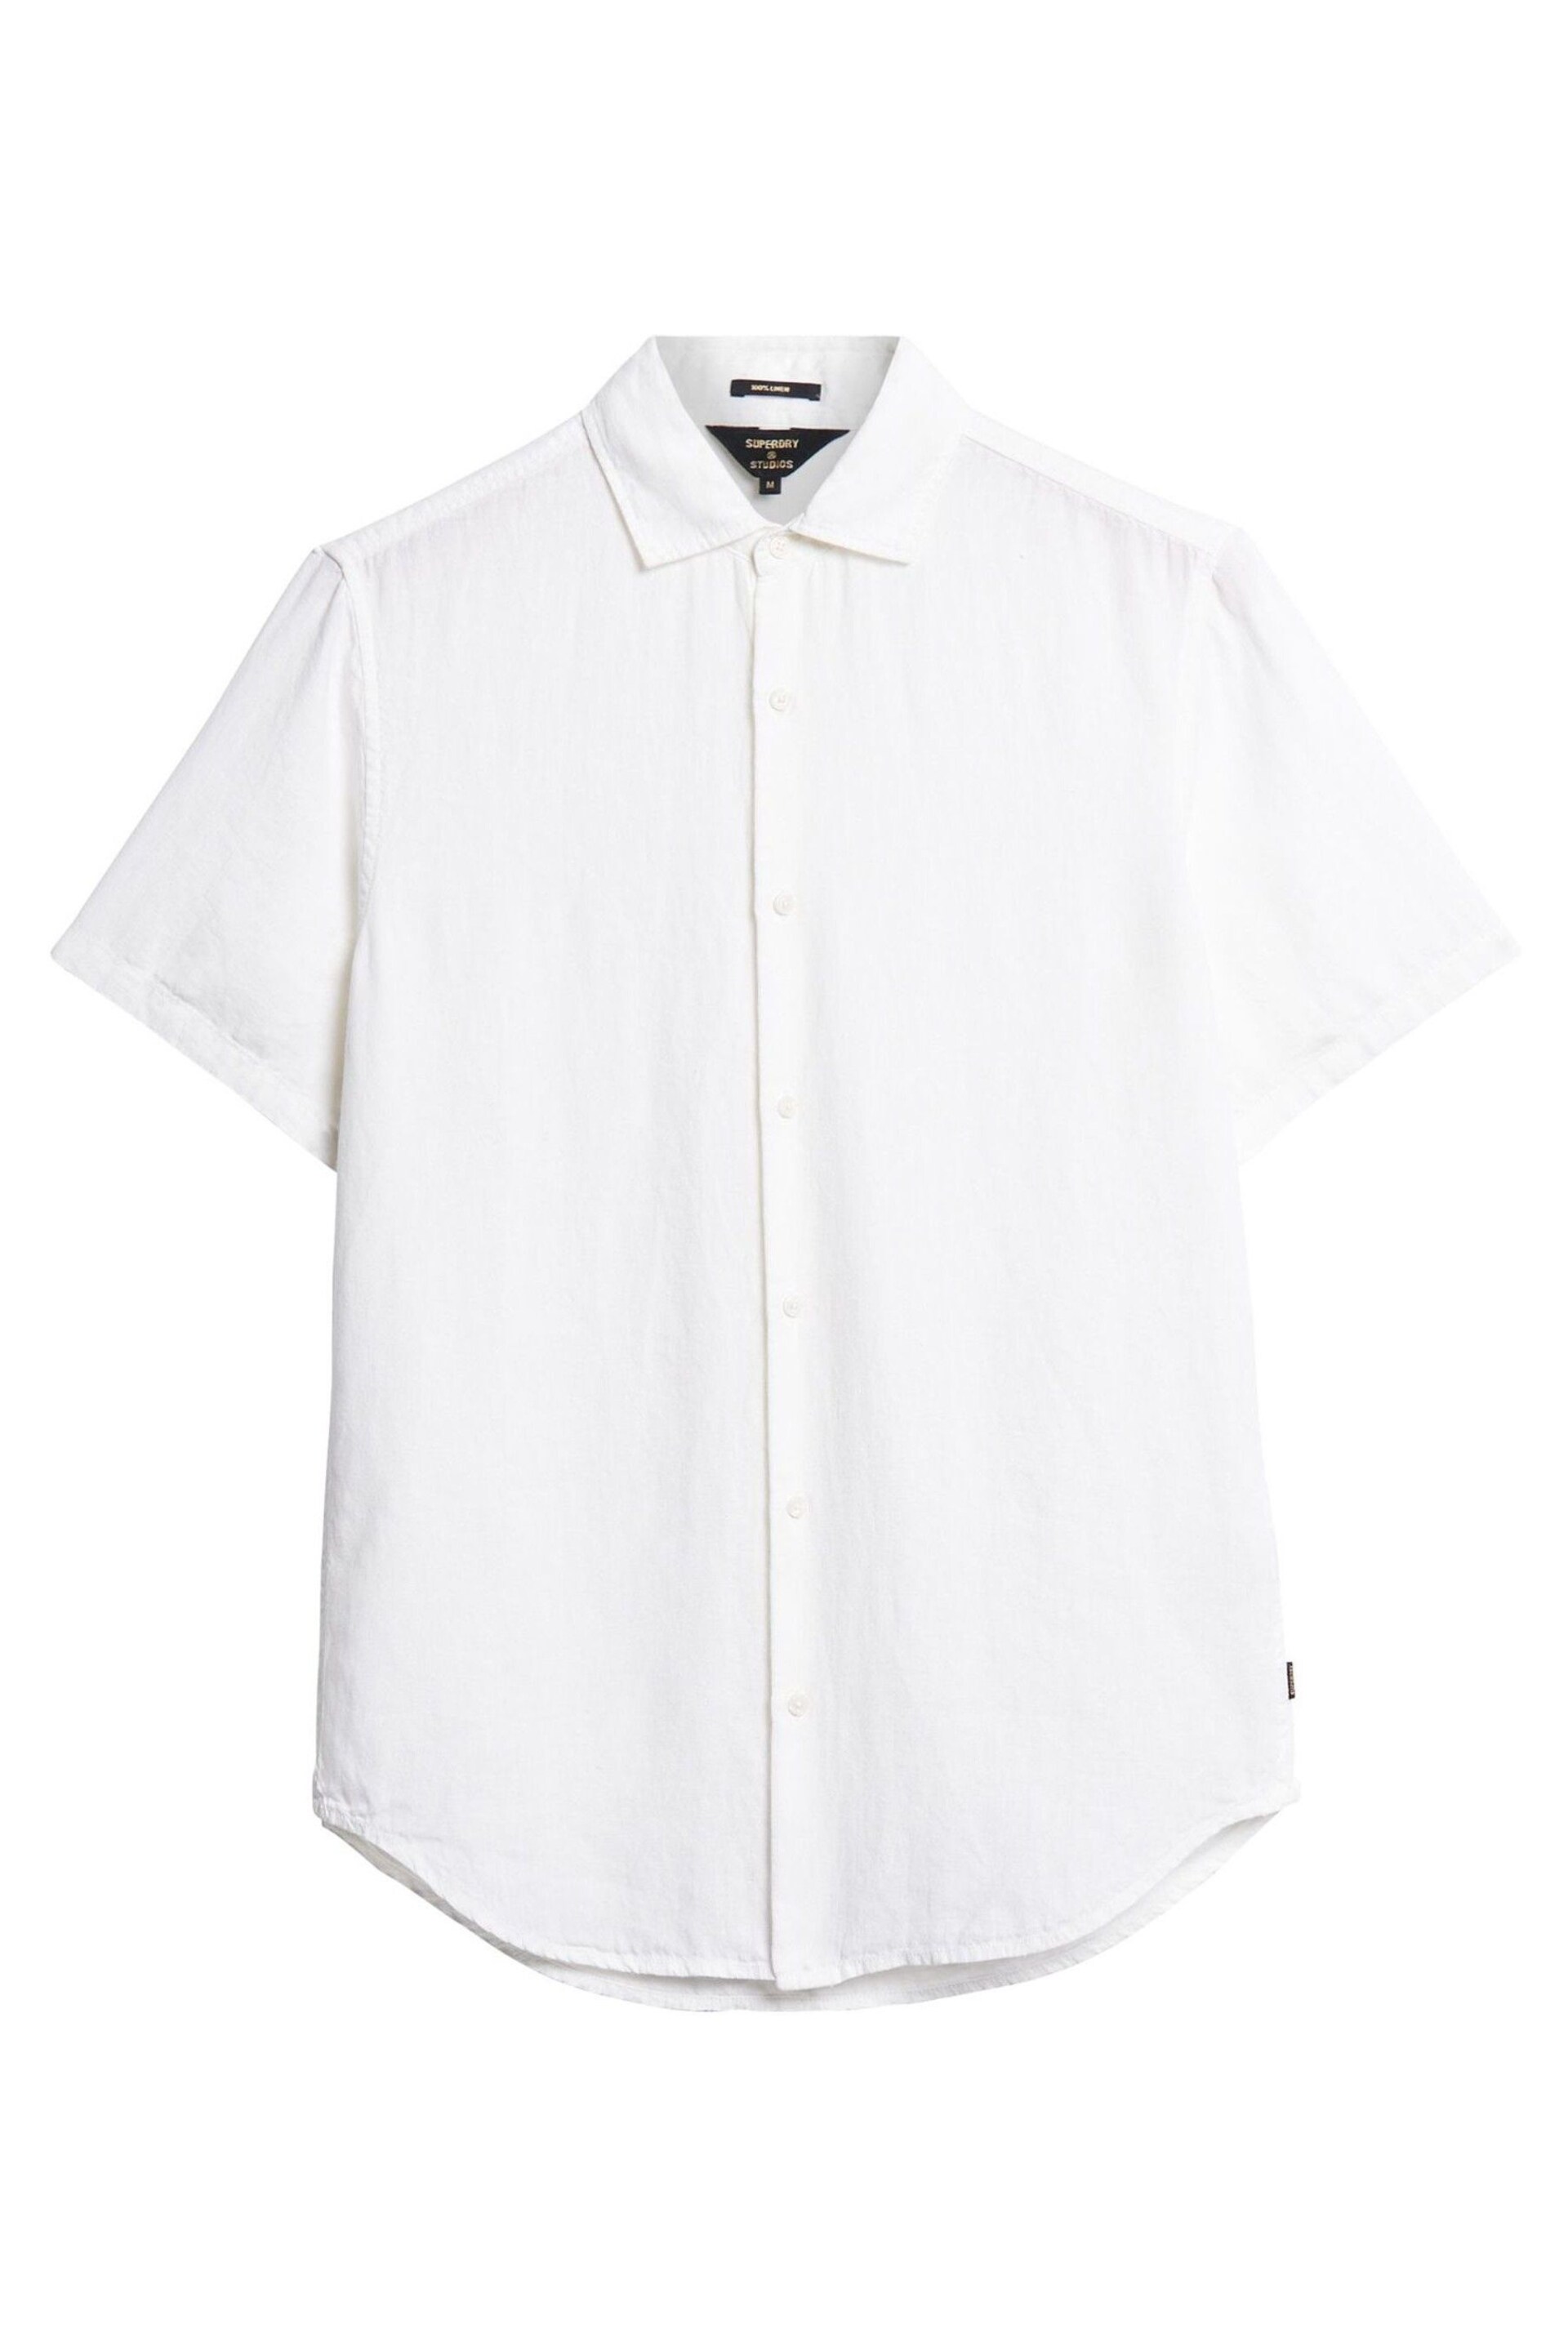 Superdry Optic Studios Casual Linen Short Sleeve Shirt - Image 7 of 9